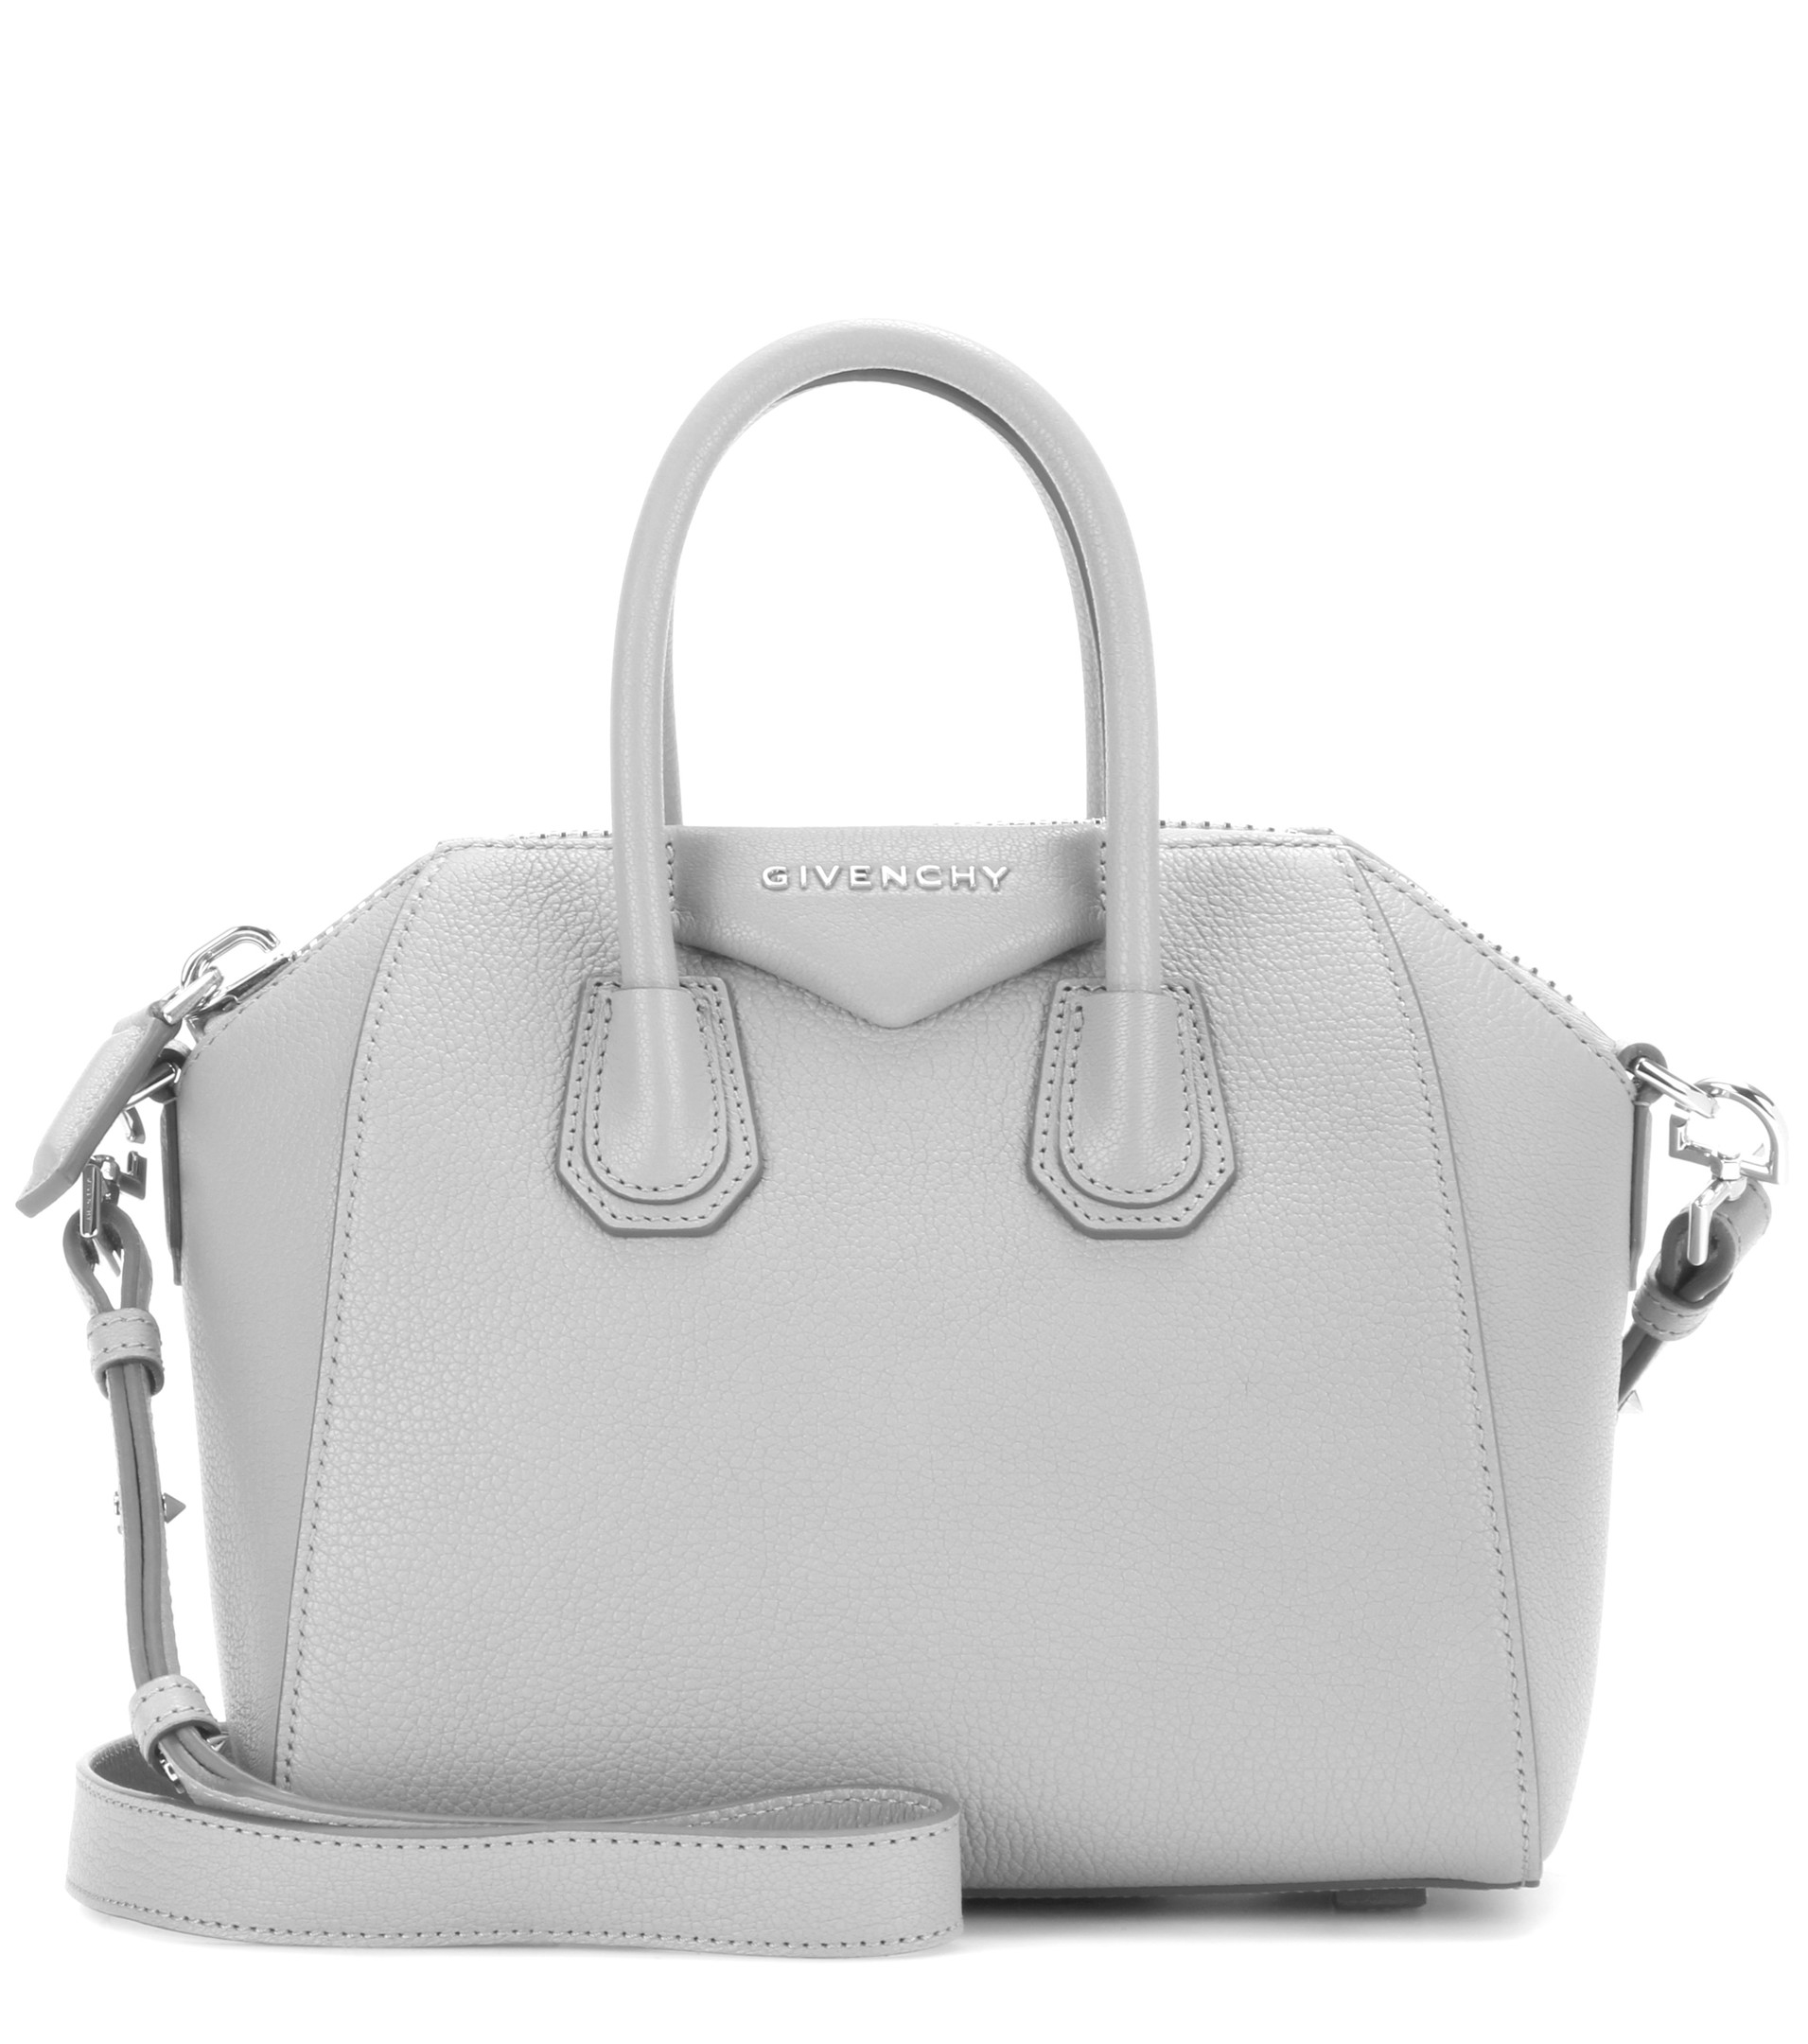 Givenchy Antigona Mini Leather Shoulder Bag in Pearl Grey (Gray) - Lyst